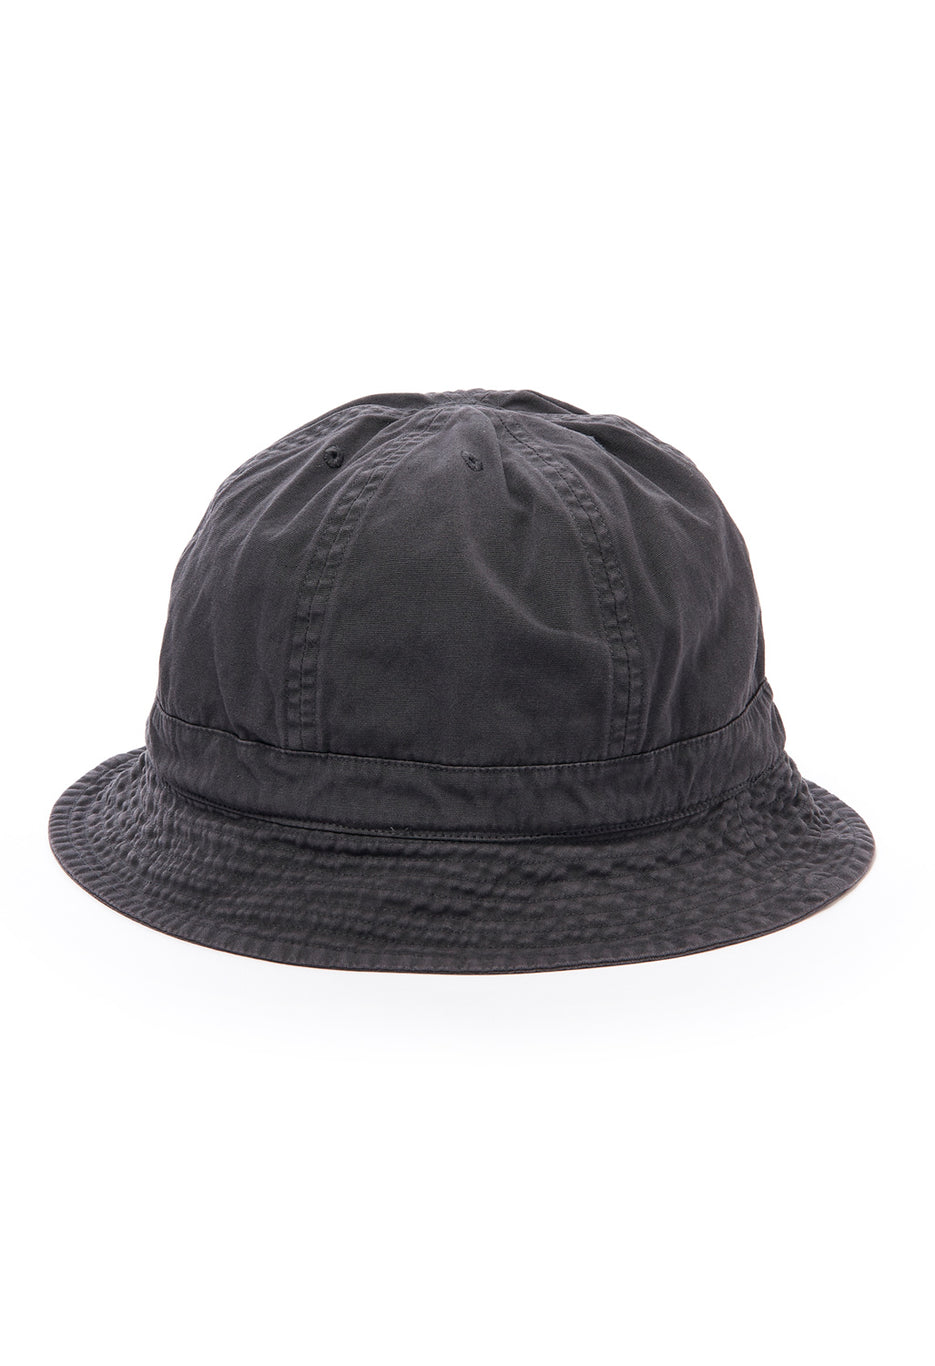 Snow Peak Men's UCCP Natural Dyed Hat - Black